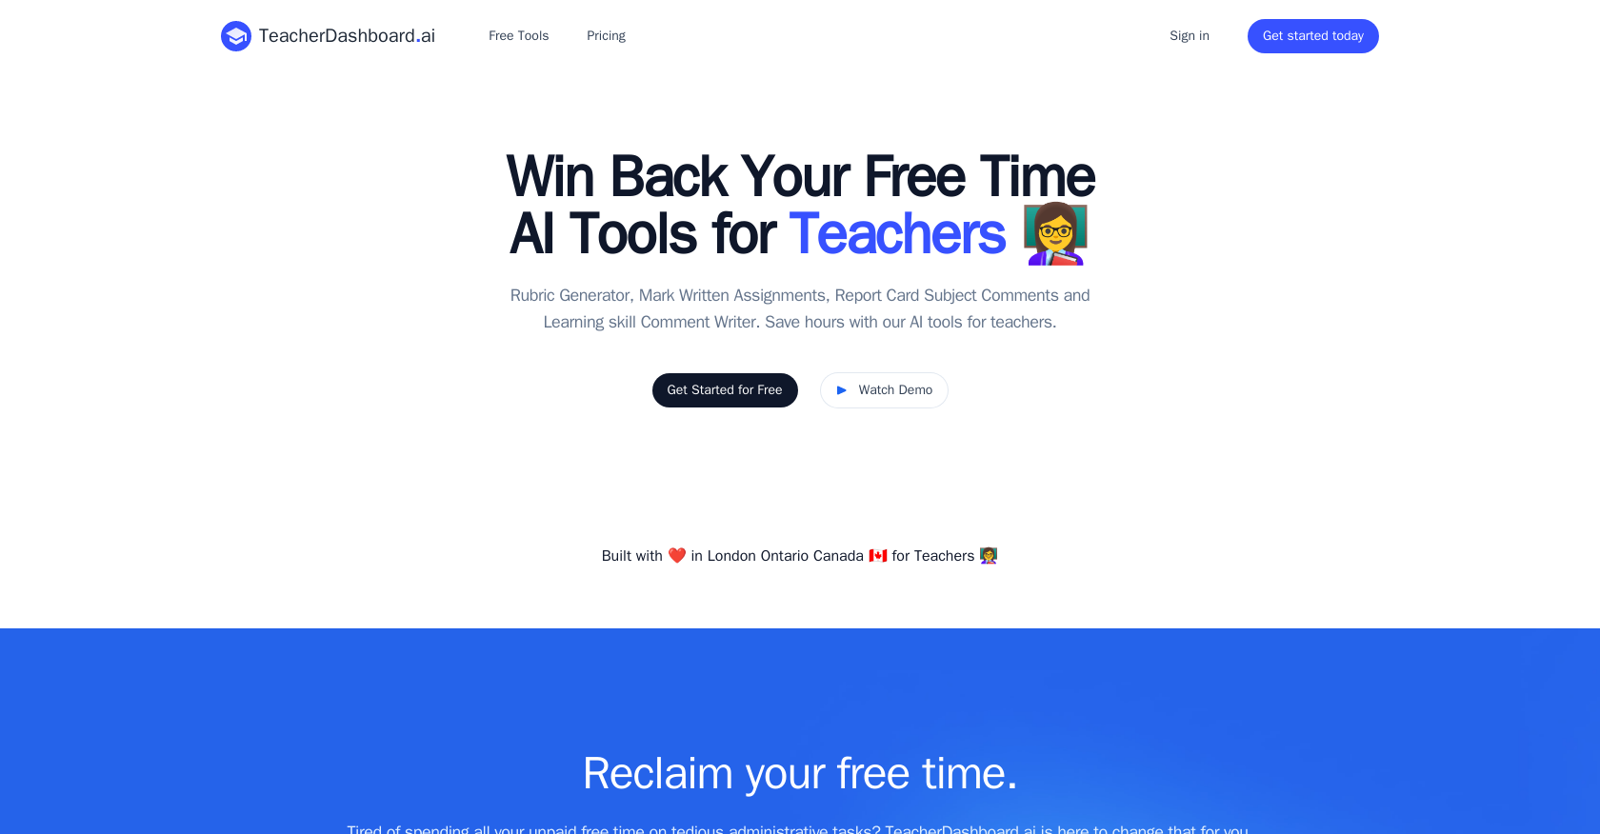 TeacherDashboard website